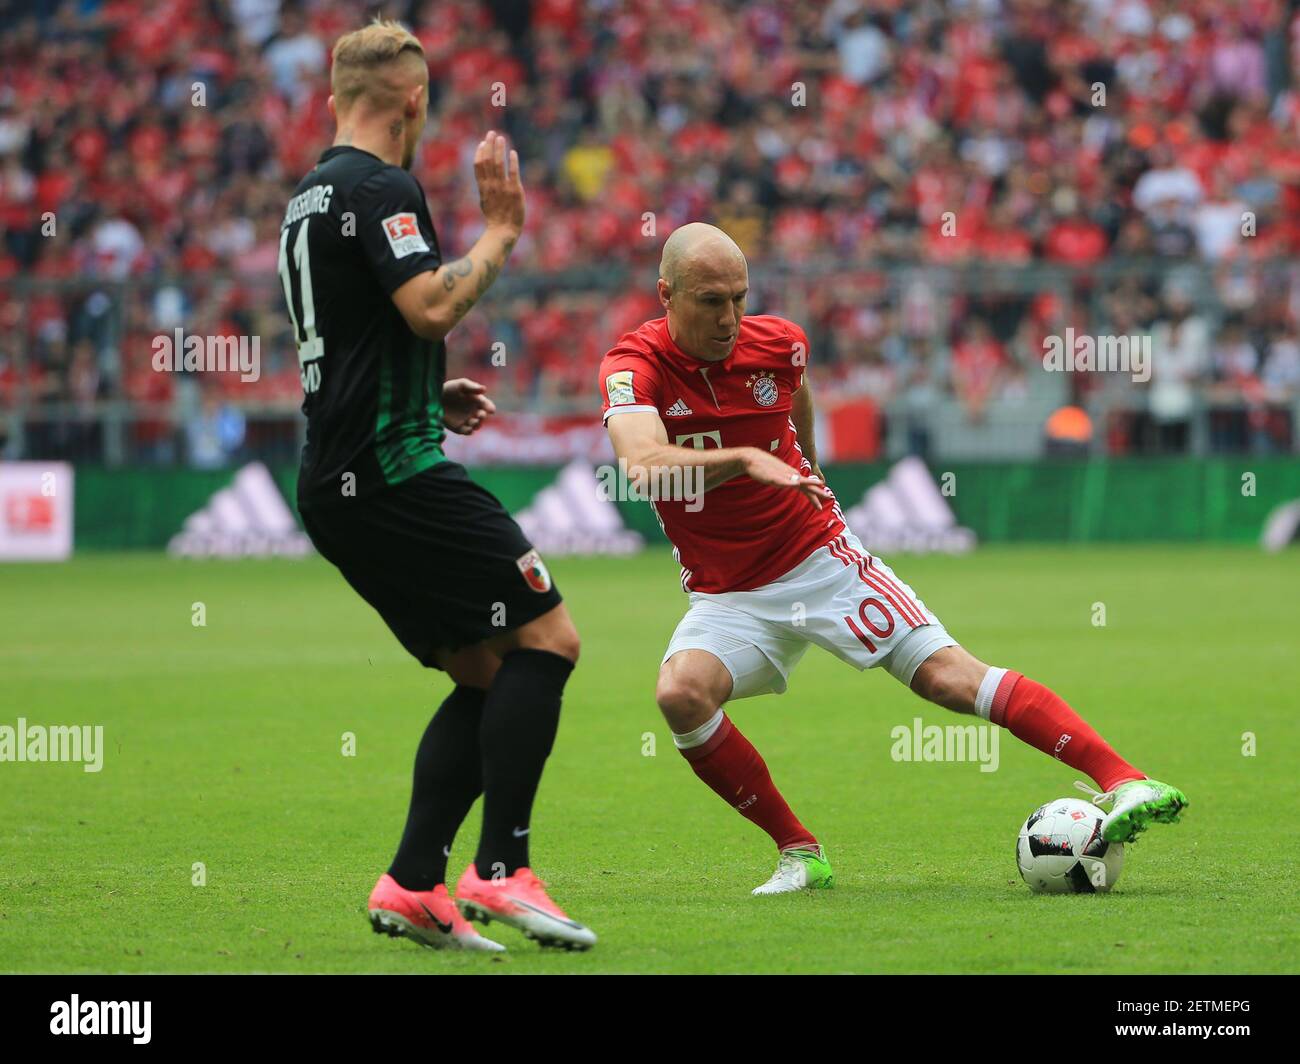 20170401, 1.BL, FC Bayern vs FC Augsburg, Allianz Arena Muenchen, Fussball, im Bild: Jonathan Schmid (FC Augsburg) vs Arjen Robben (FCB) *Copyright by: Philippe Ruiz Oberbrunner Strasse 2 81475 MŸnchen, tel: 089 745 82 22, Mobil: 0177 29 39 408 ( MAIL: philippe ruiz@gmx.de ) page d'accueil: www.sportpressefoto-ruiz.de (photo de Xinhua/Sipa USA) Banque D'Images